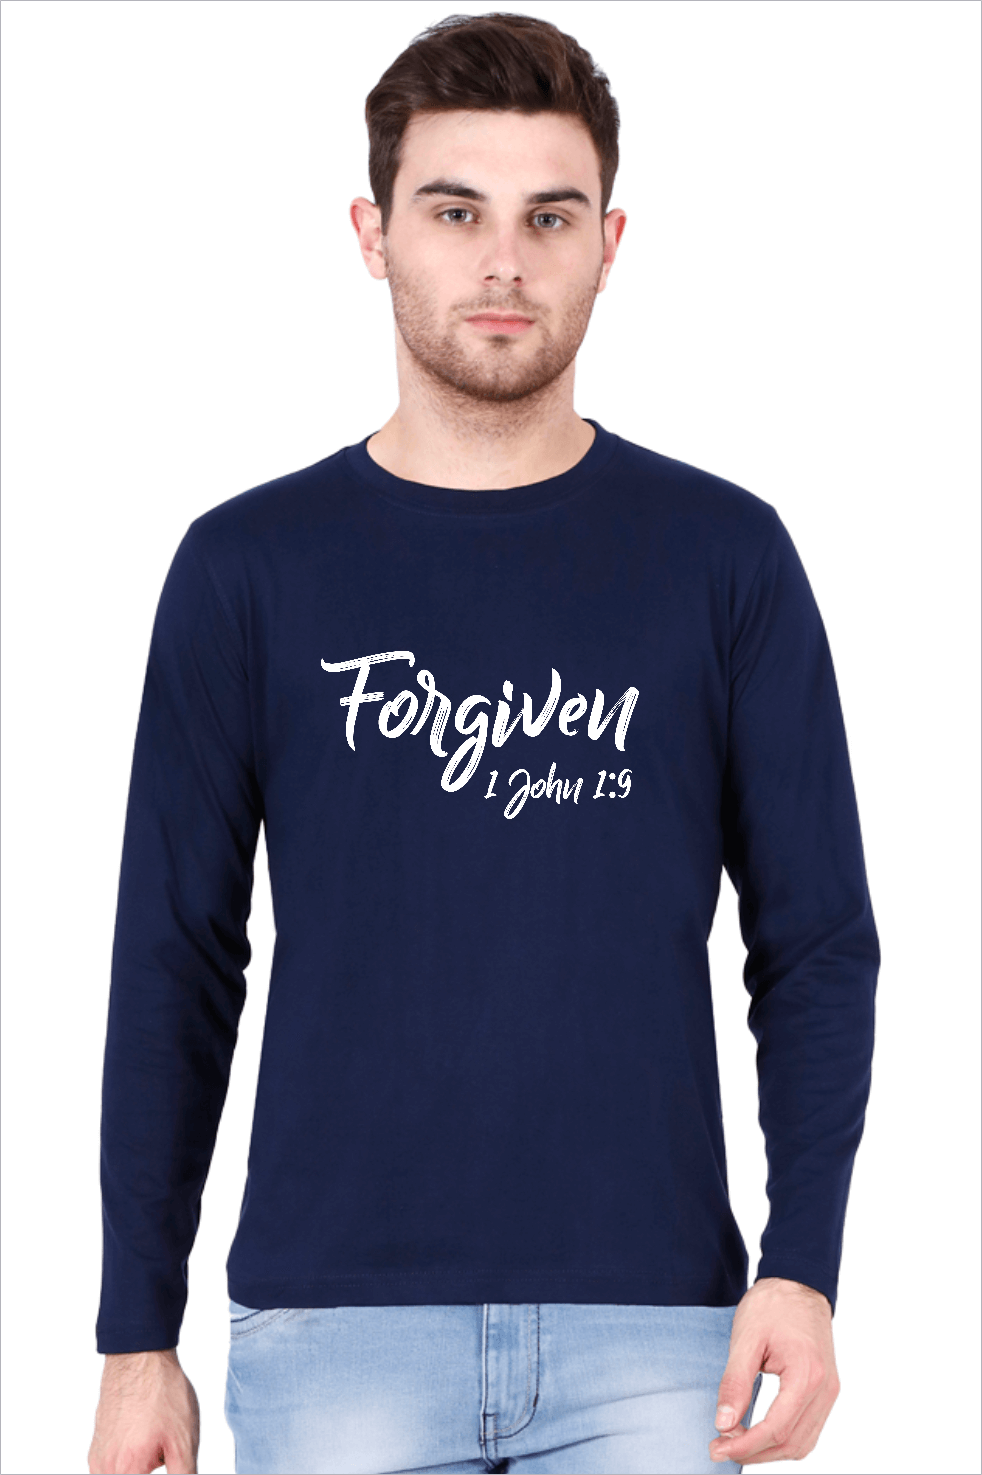 Living Words Men Round Neck T Shirt S / Navy Blue Forgiven 1 John 1:9